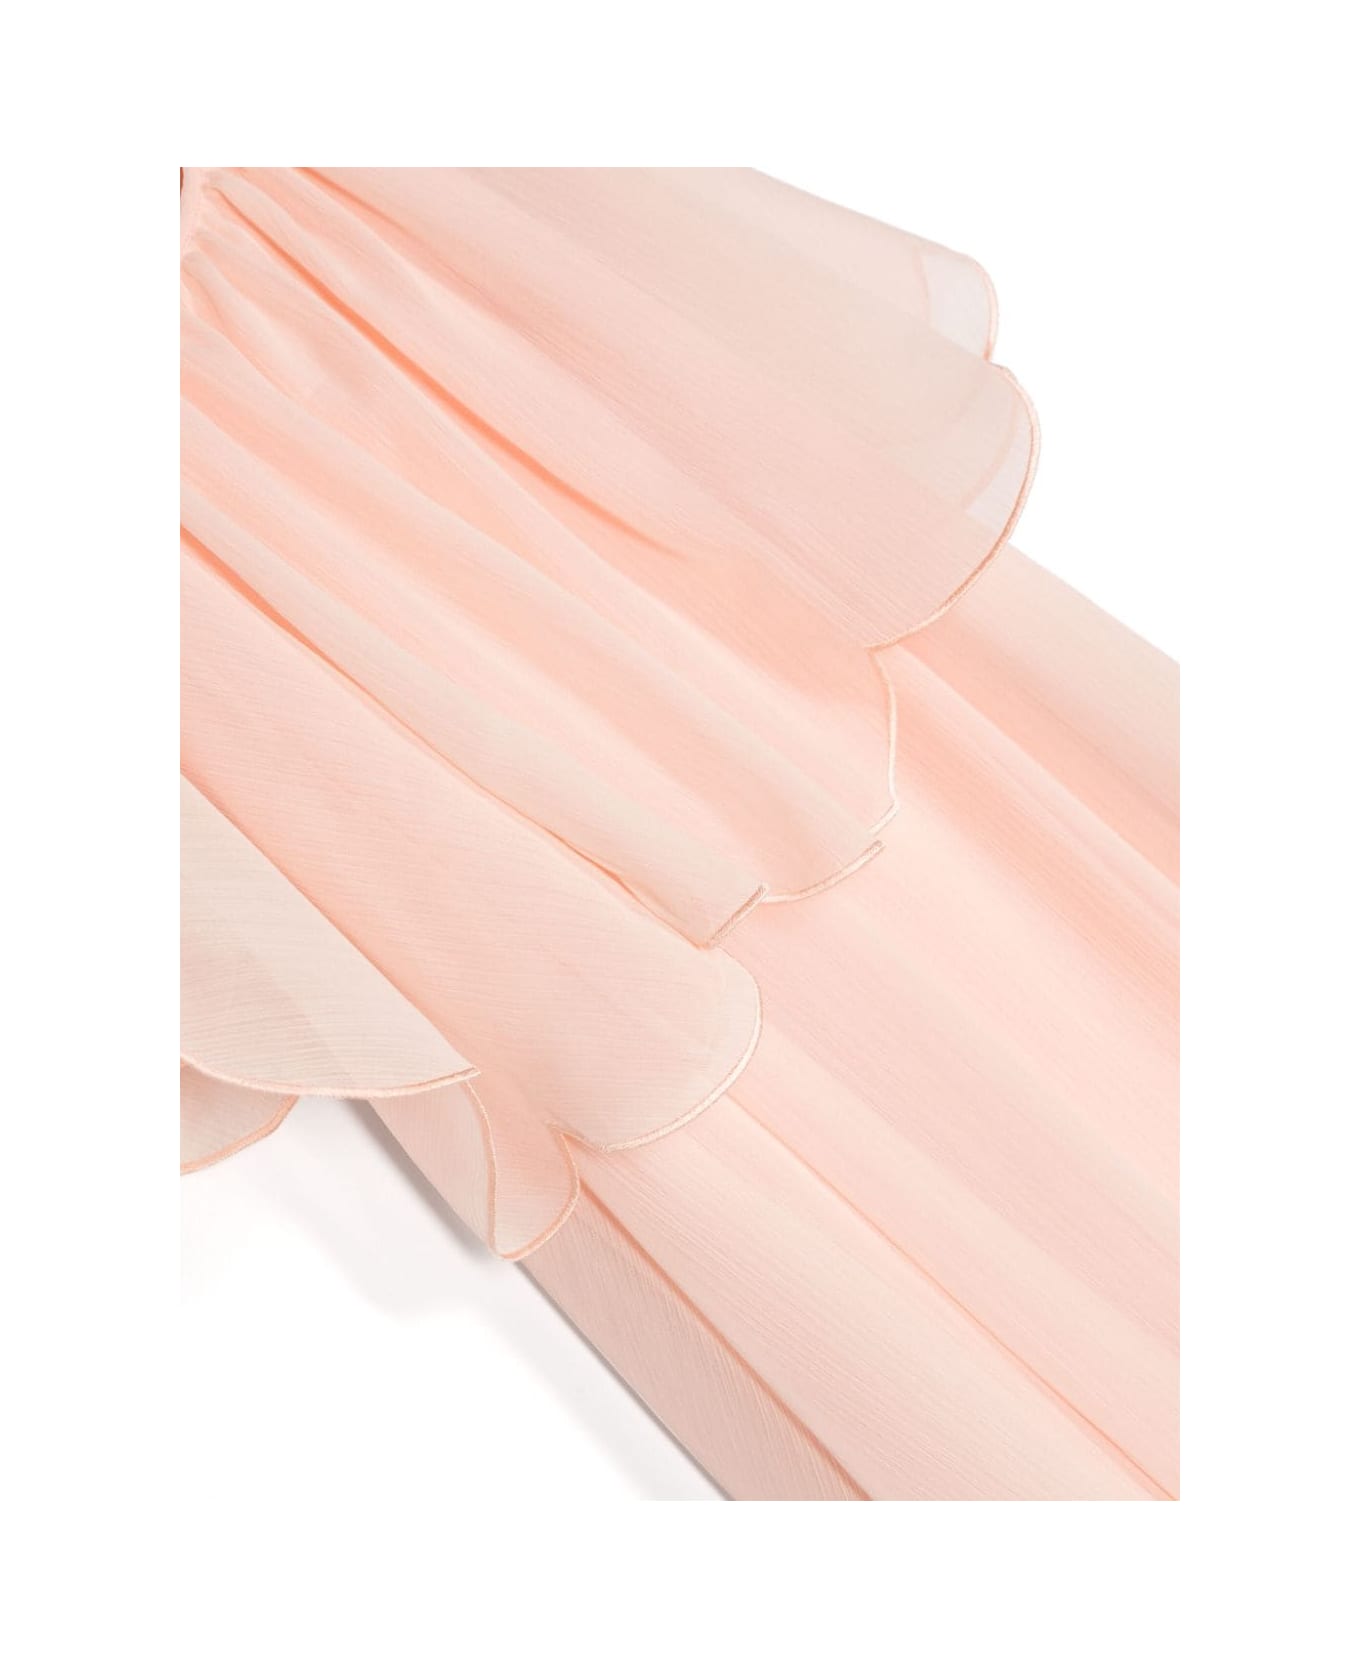 Stella McCartney Kids Pink Asymmetric Dress With Ruffles - Pink